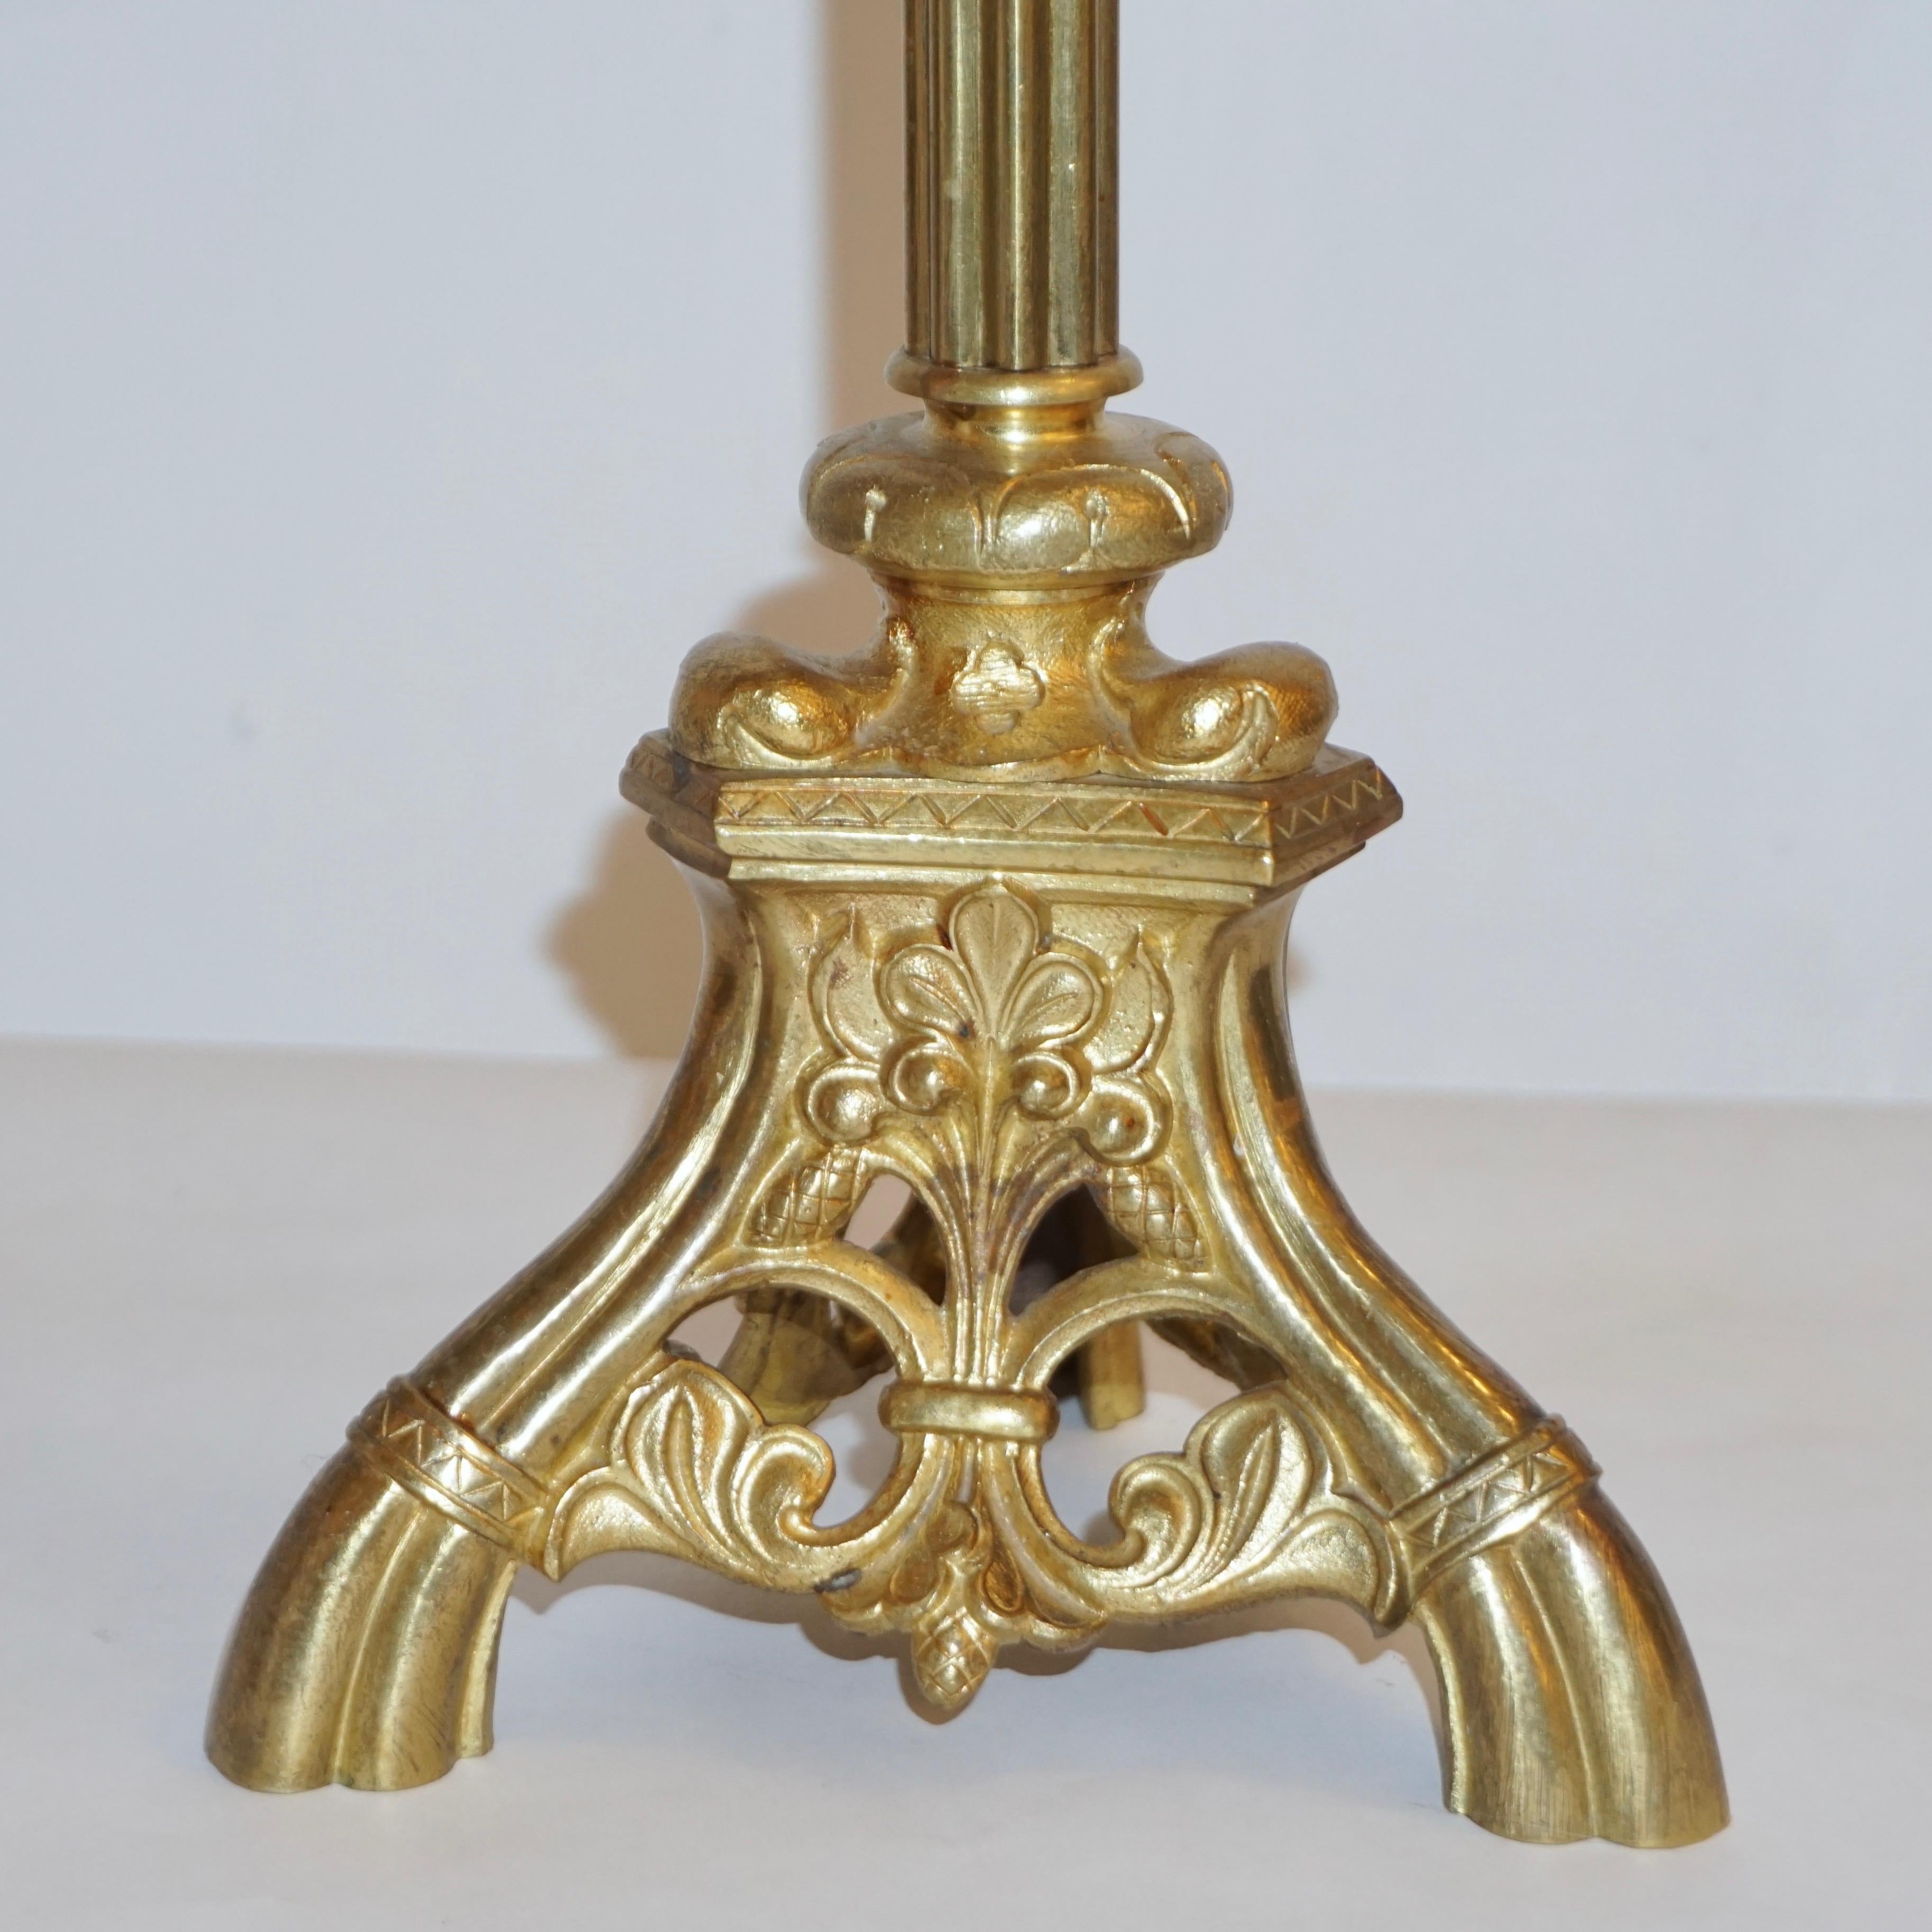 1880s French Baroque Revival Gilt Bronze Ormolu Pricket Candlestick 5